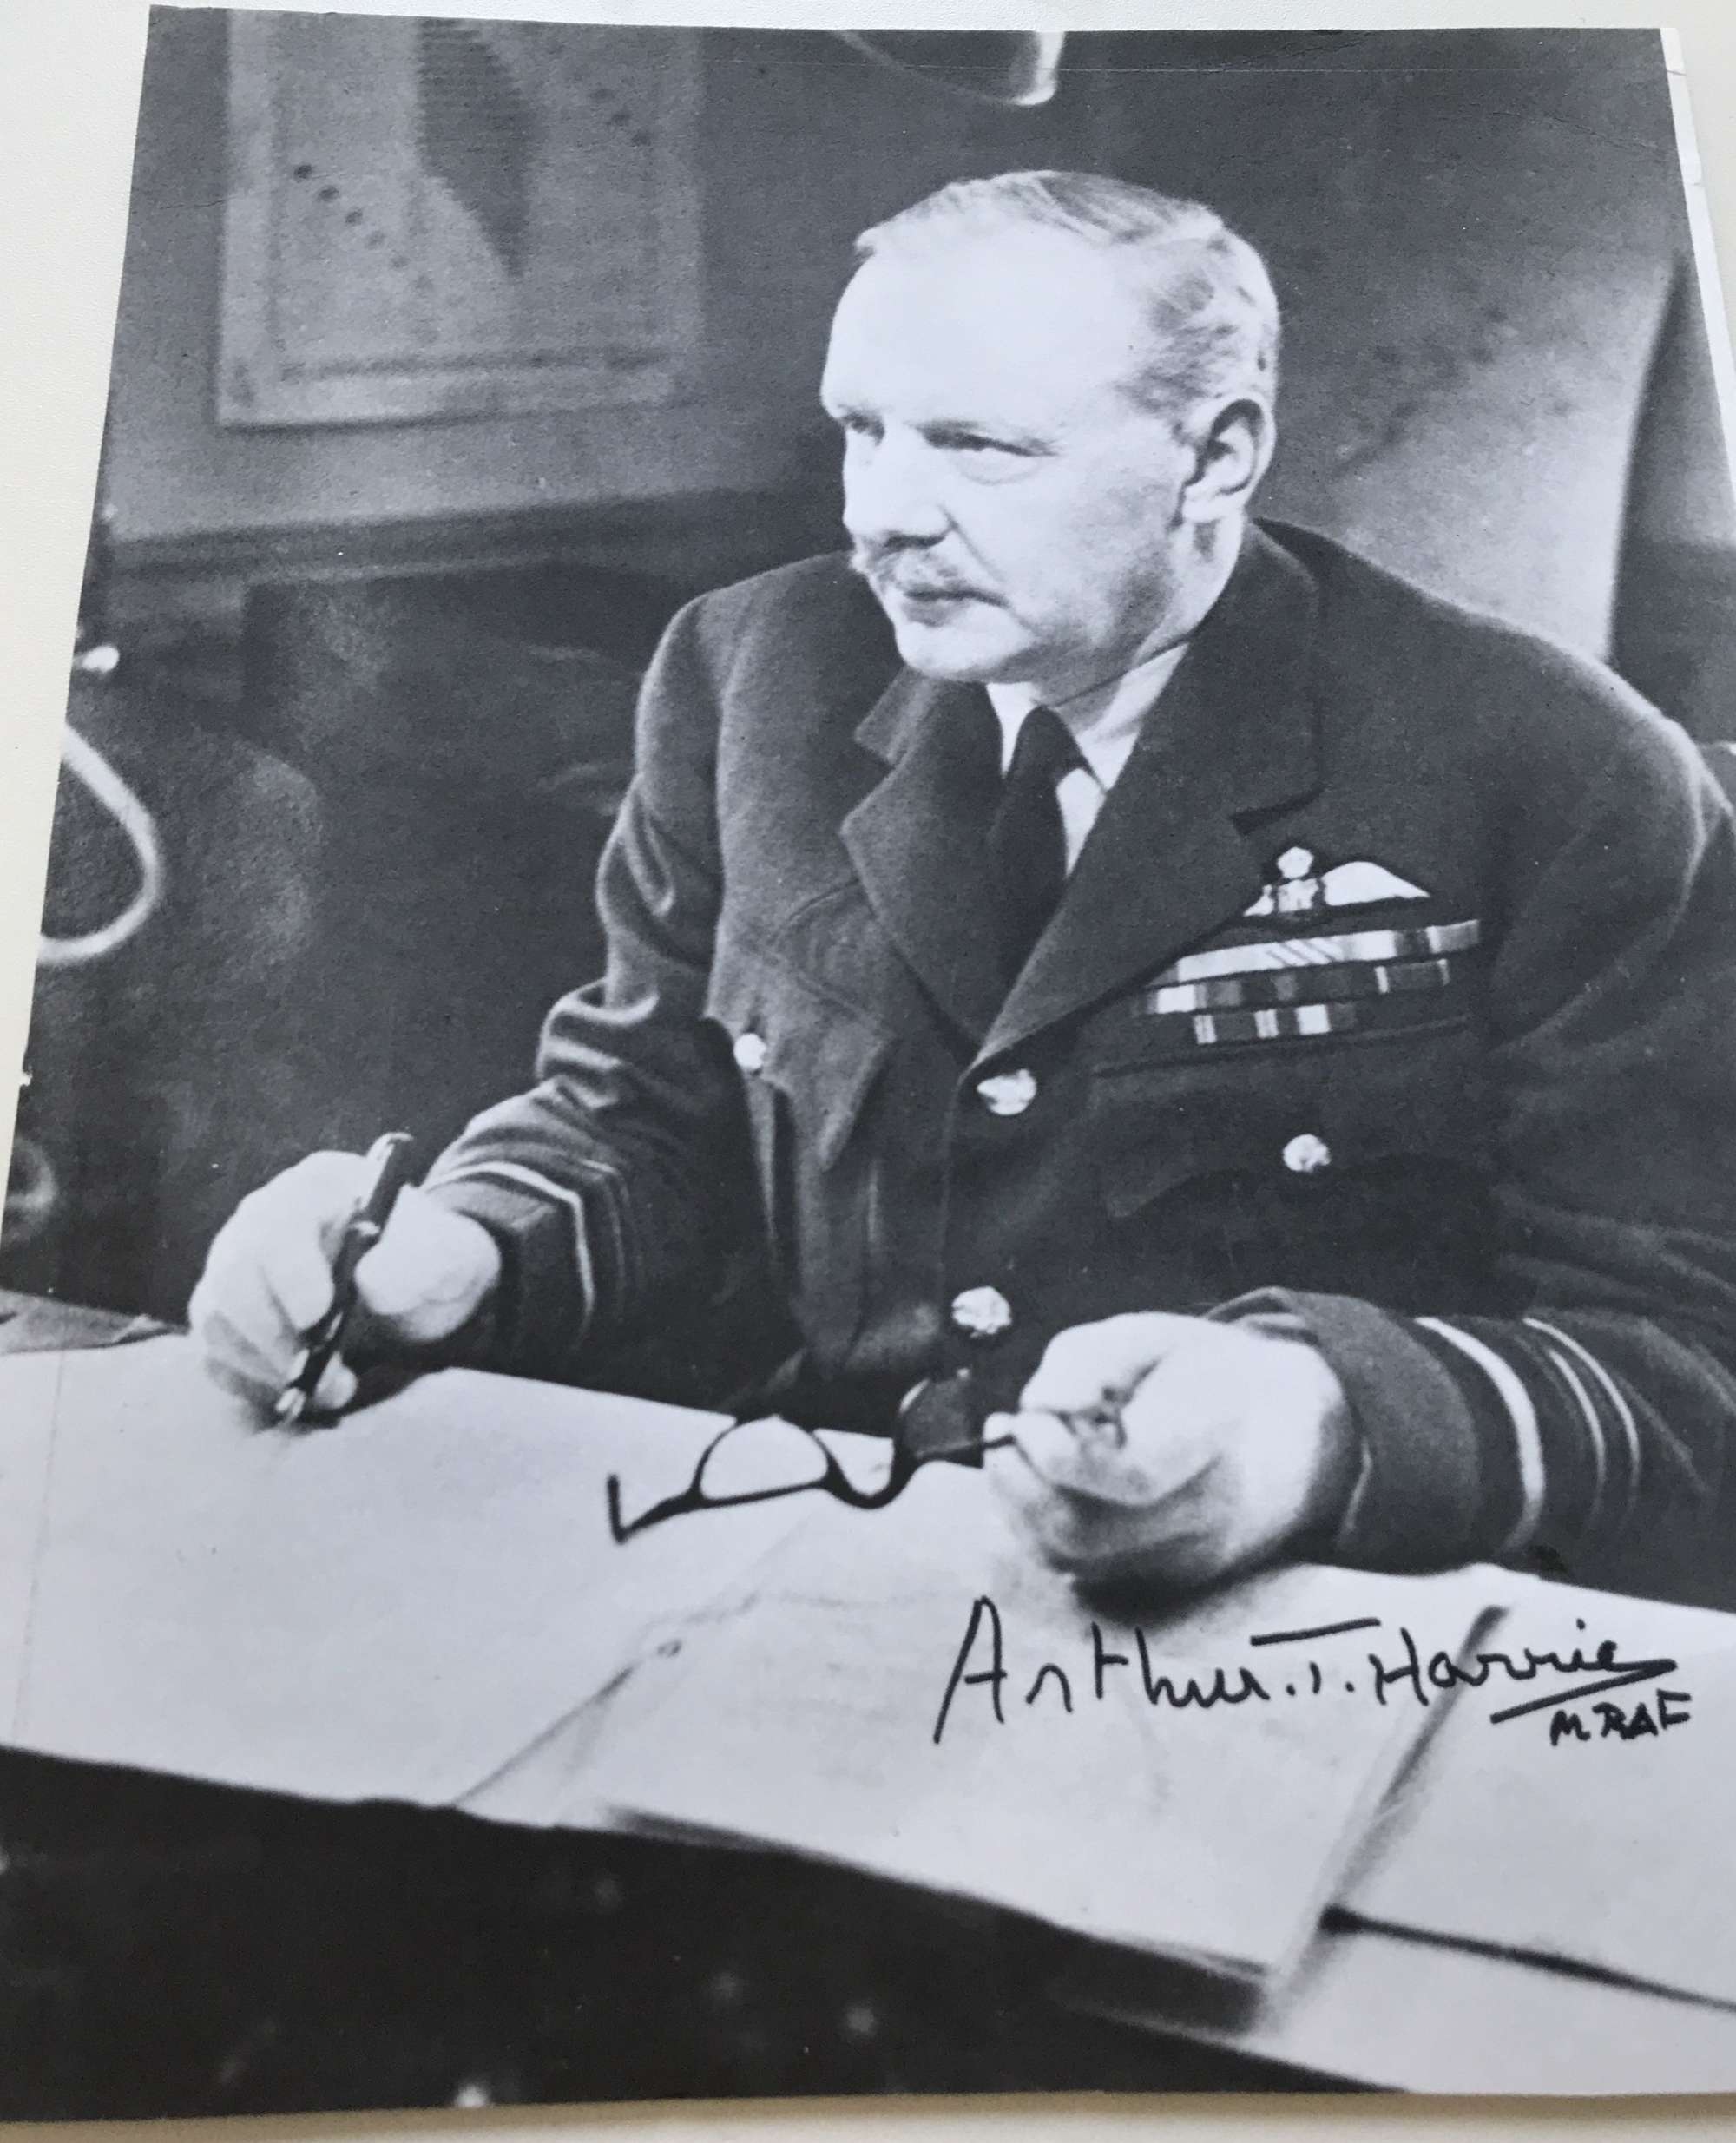 Signed photograph of Arthur Bomber Harris